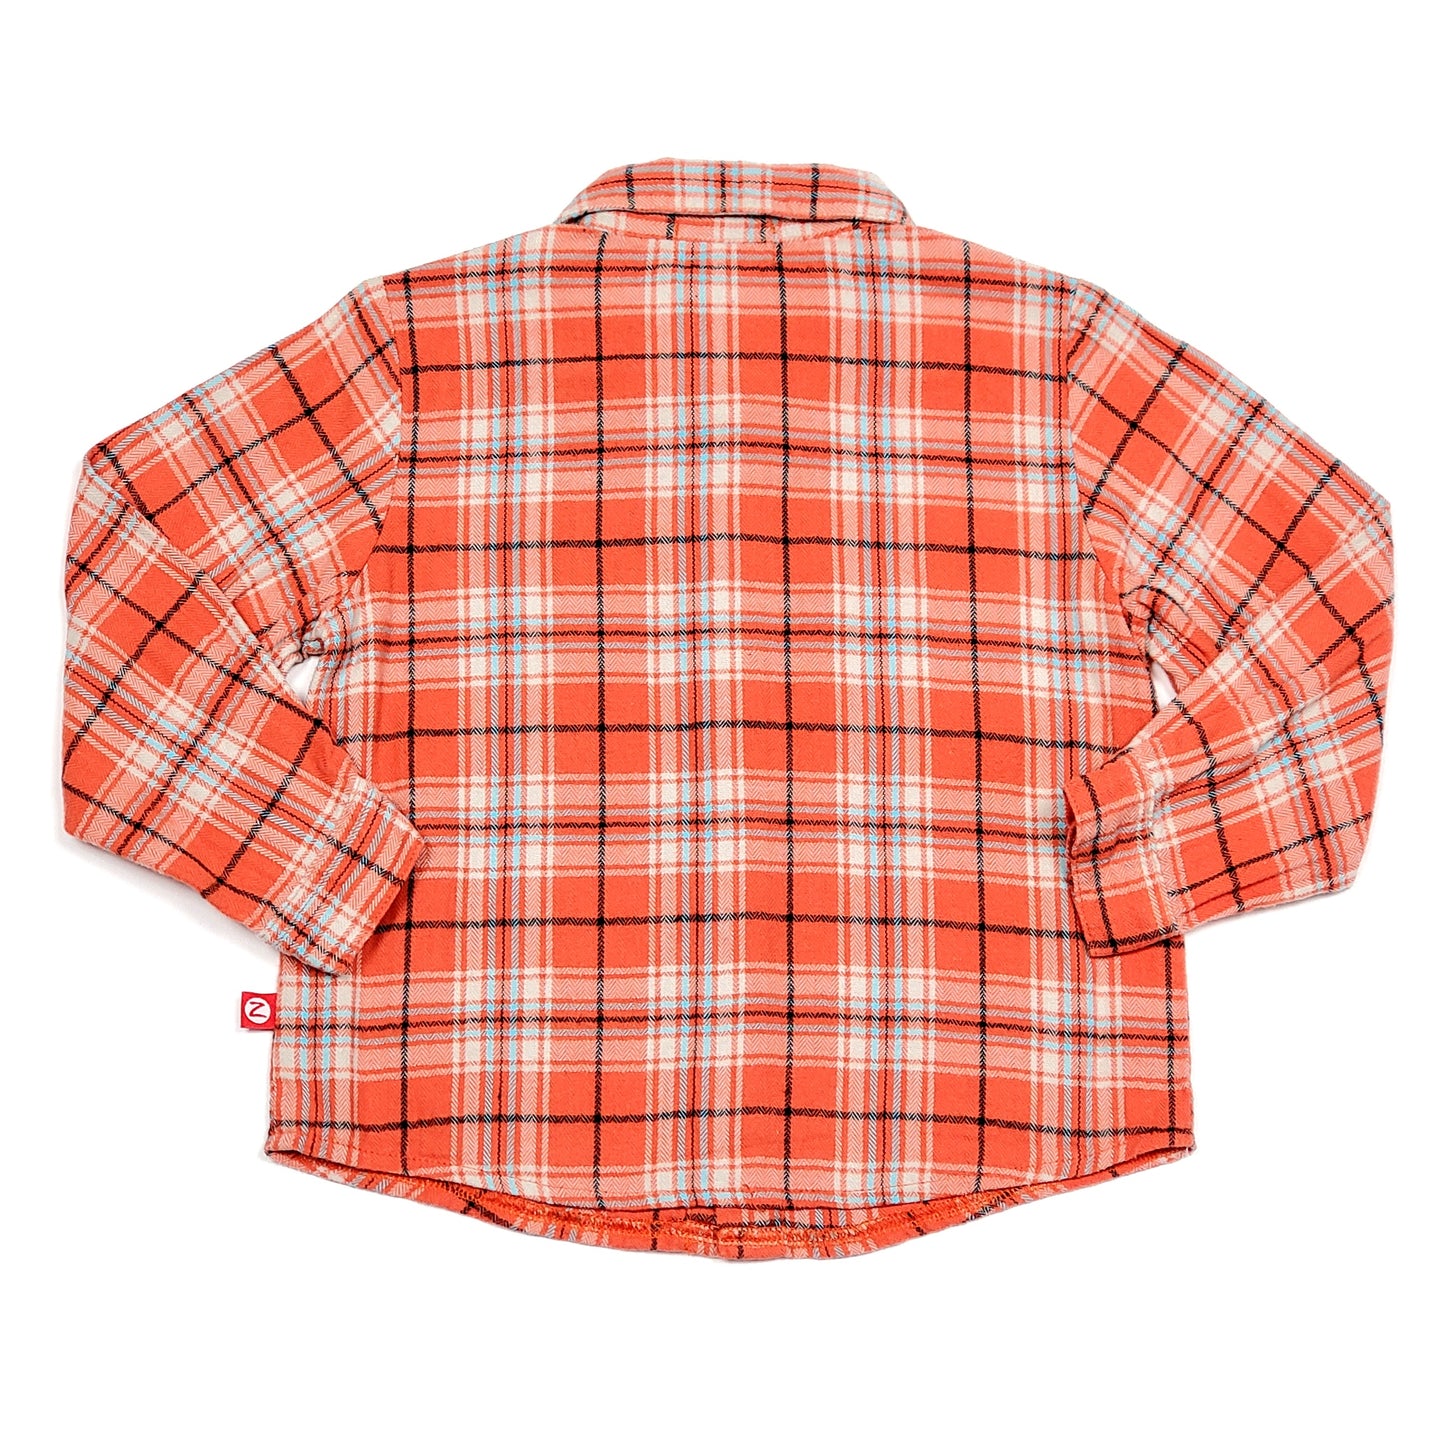 Zutano Orange Grey Boys Flannel Shirt 2T Used View 2